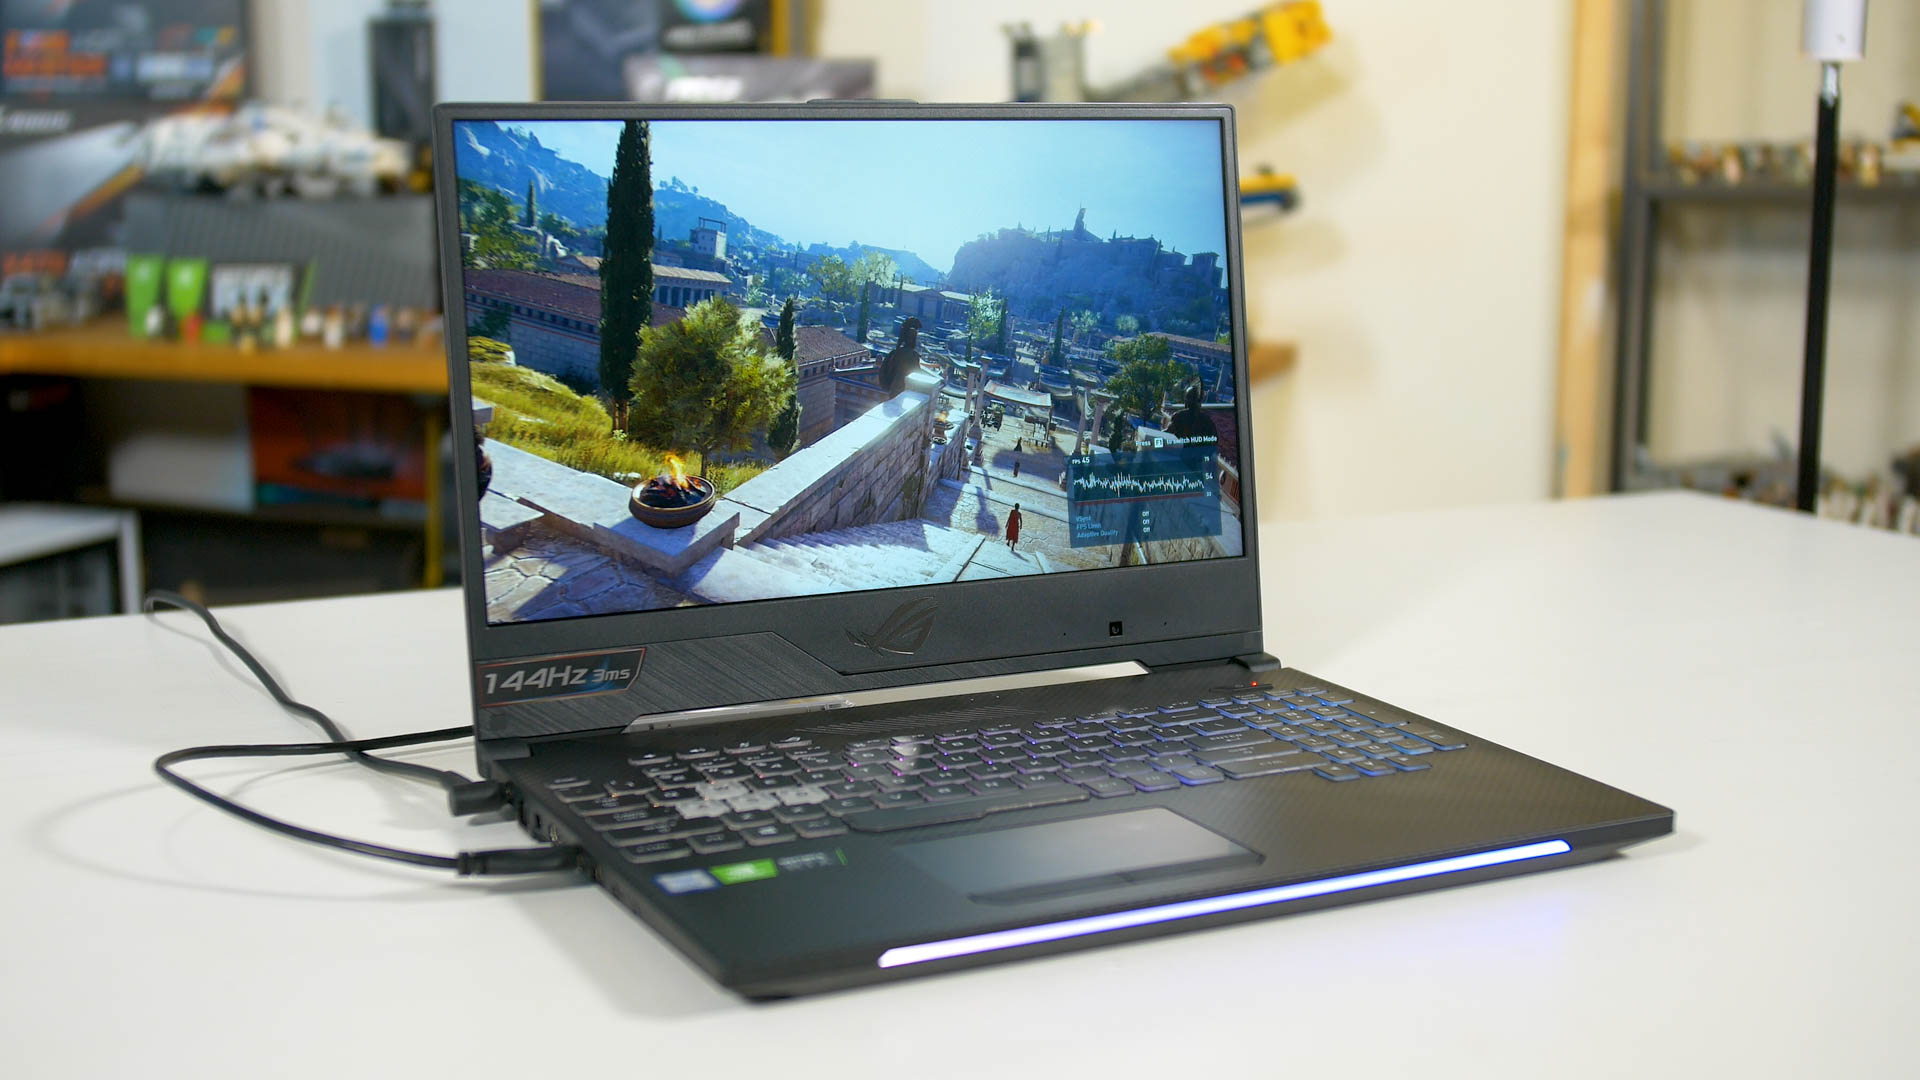 Nvidia GeForce RTX 2060 (Laptop GPU) Review | TechSpot